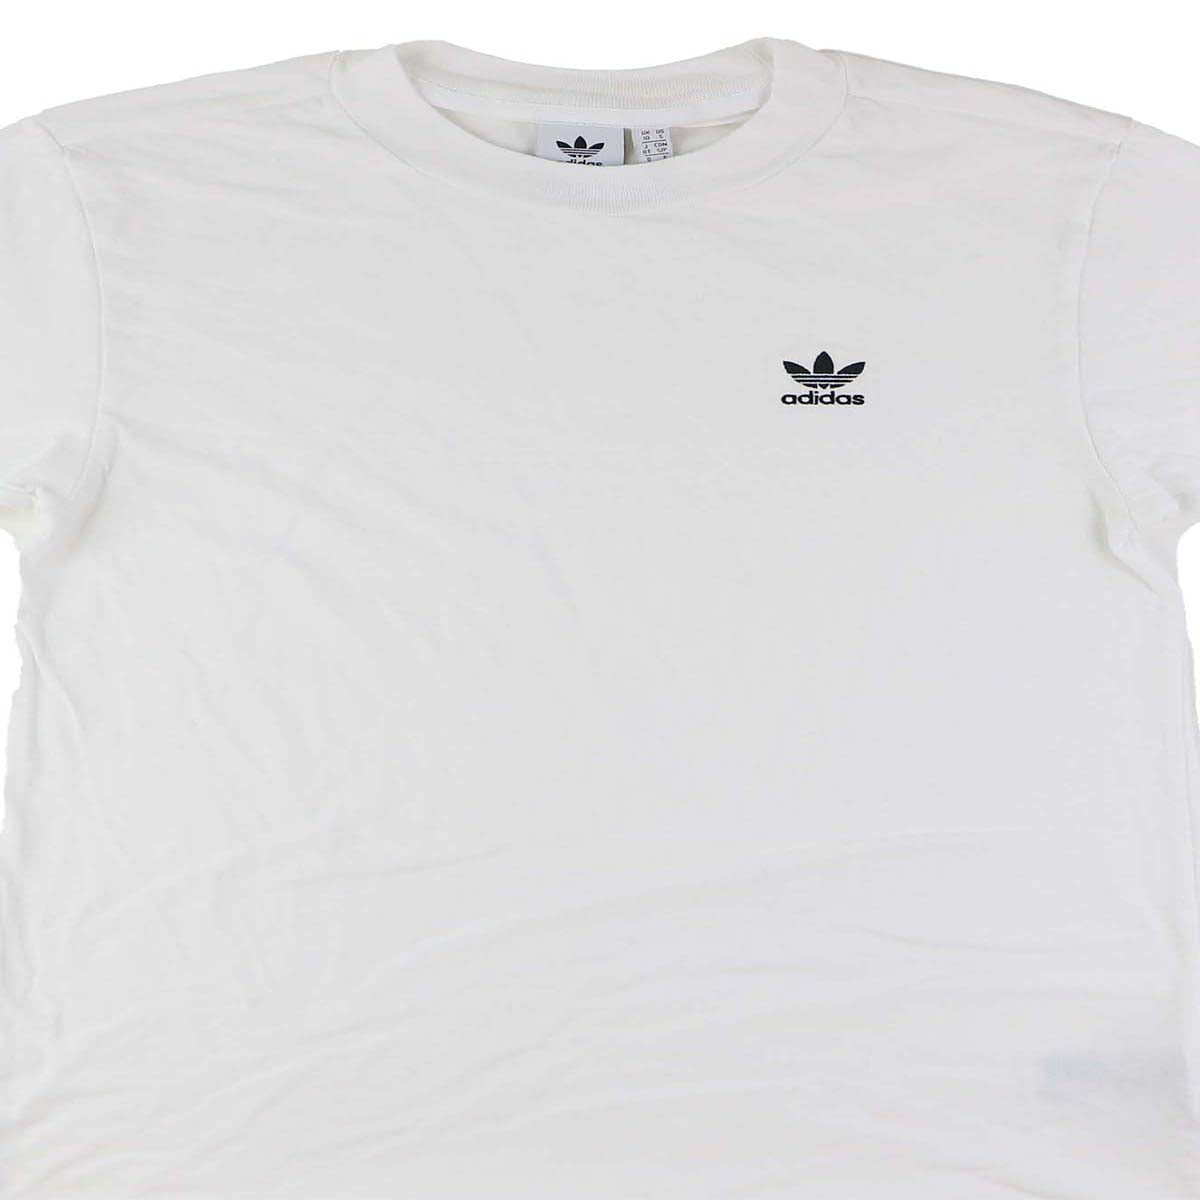 Adidas T-shirt (S)